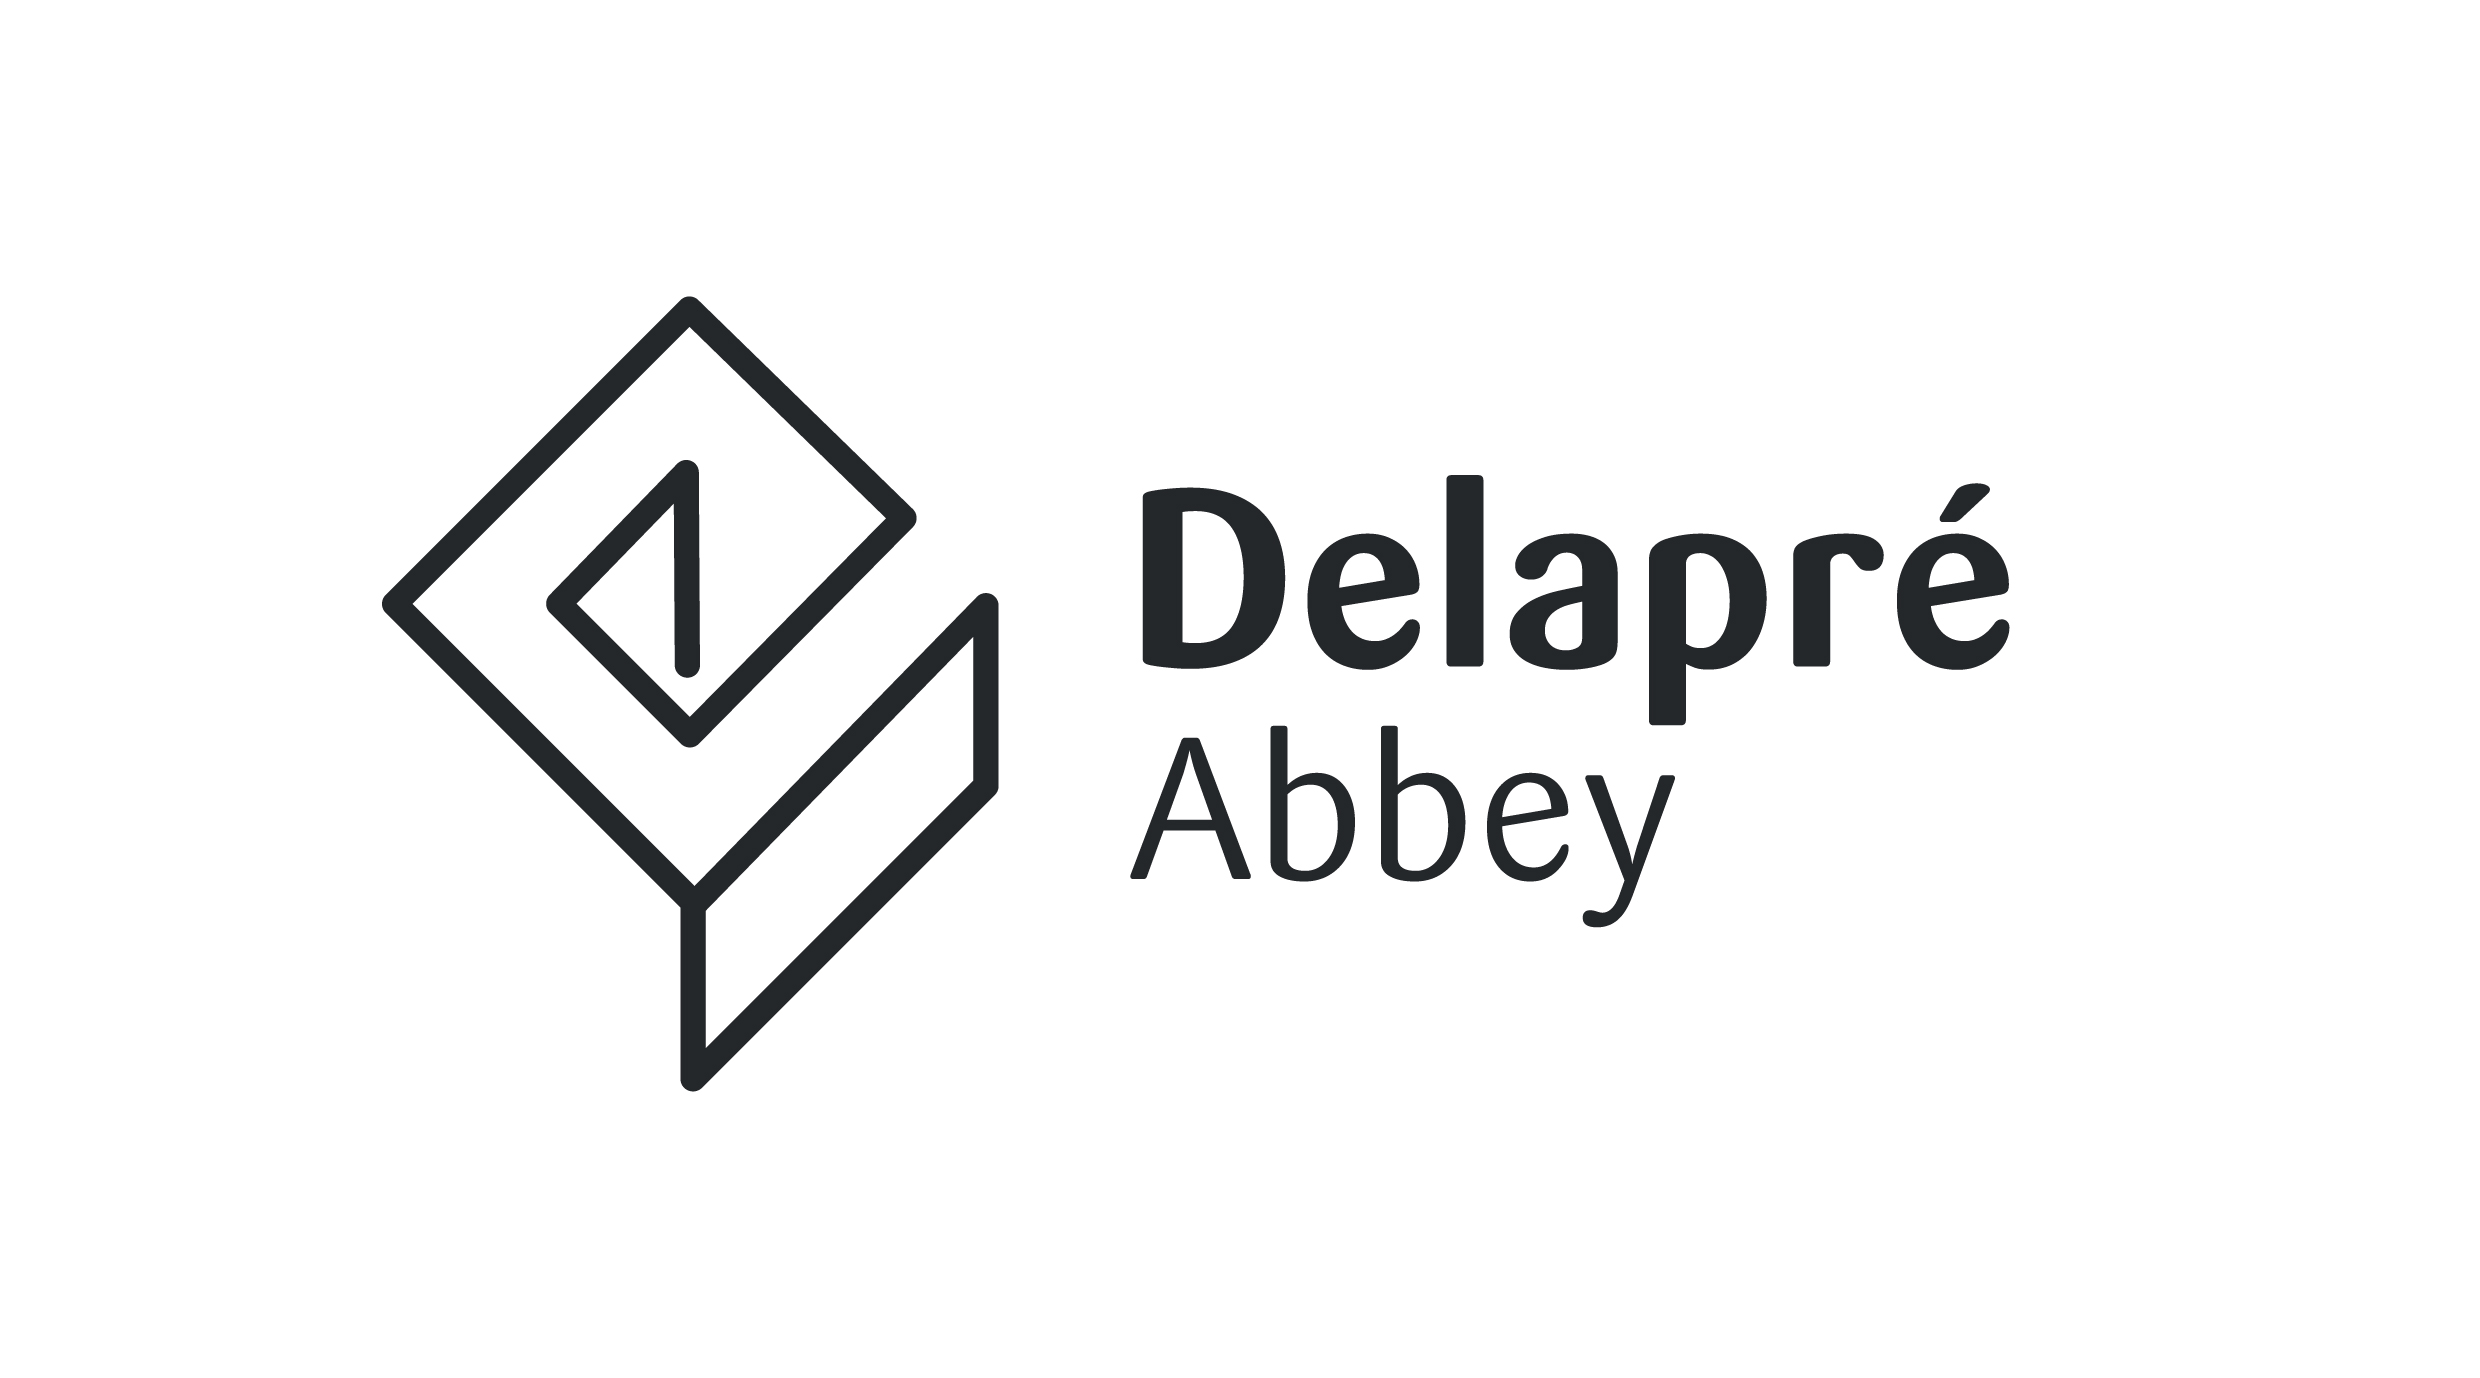 Delapre Abbey logo